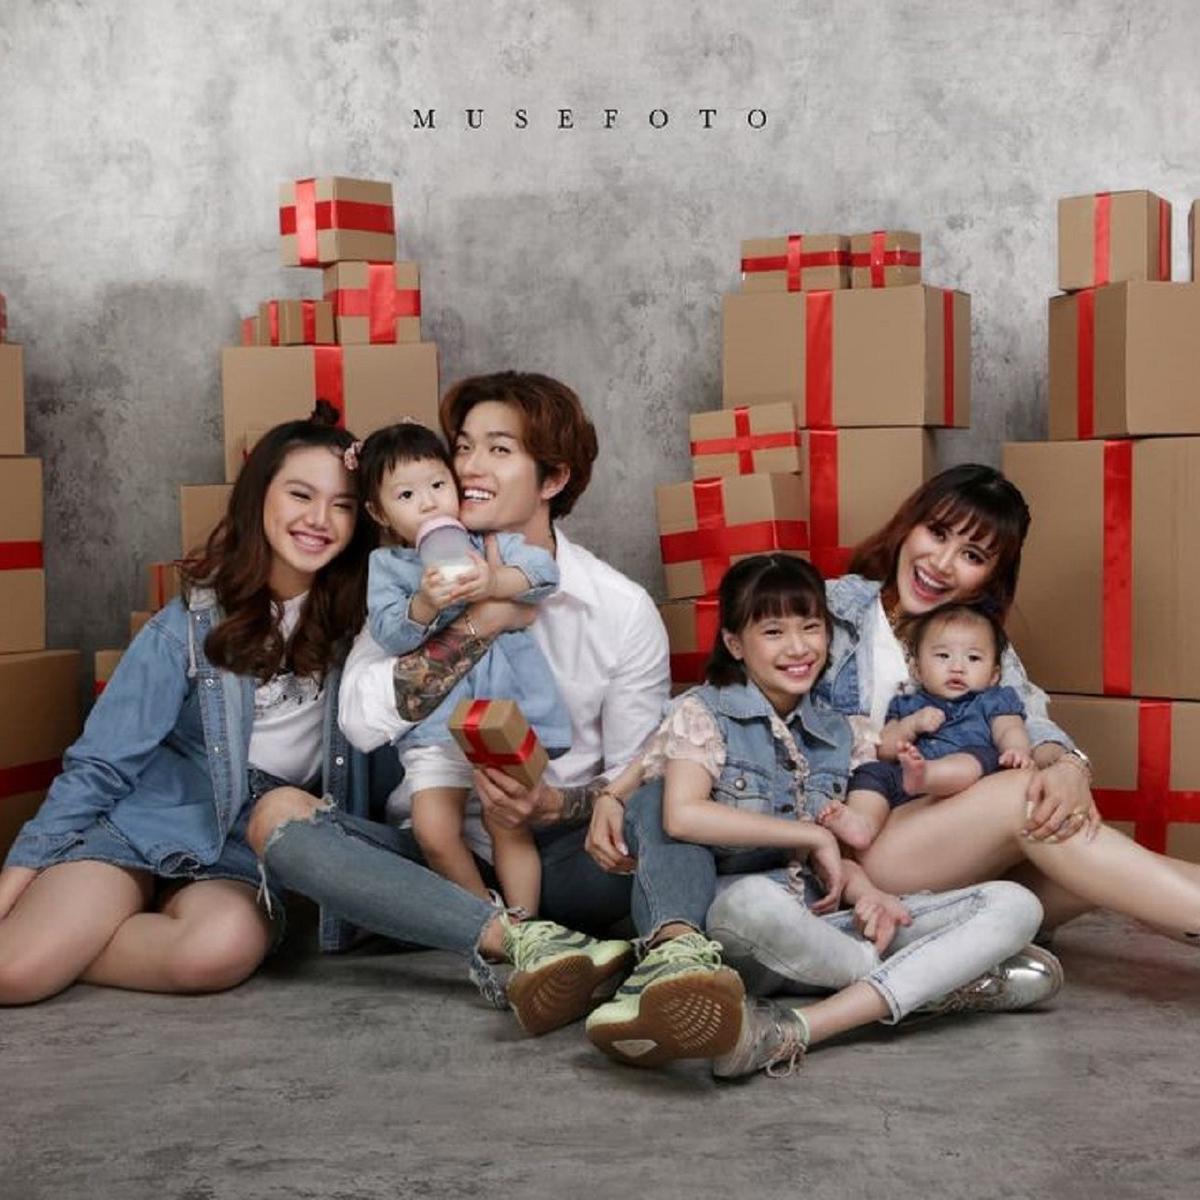 Lee Jeong Hoon Inginkan Anak Lelaki, Istri Dijanjikan Hadiah Berlian -  Lifestyle 